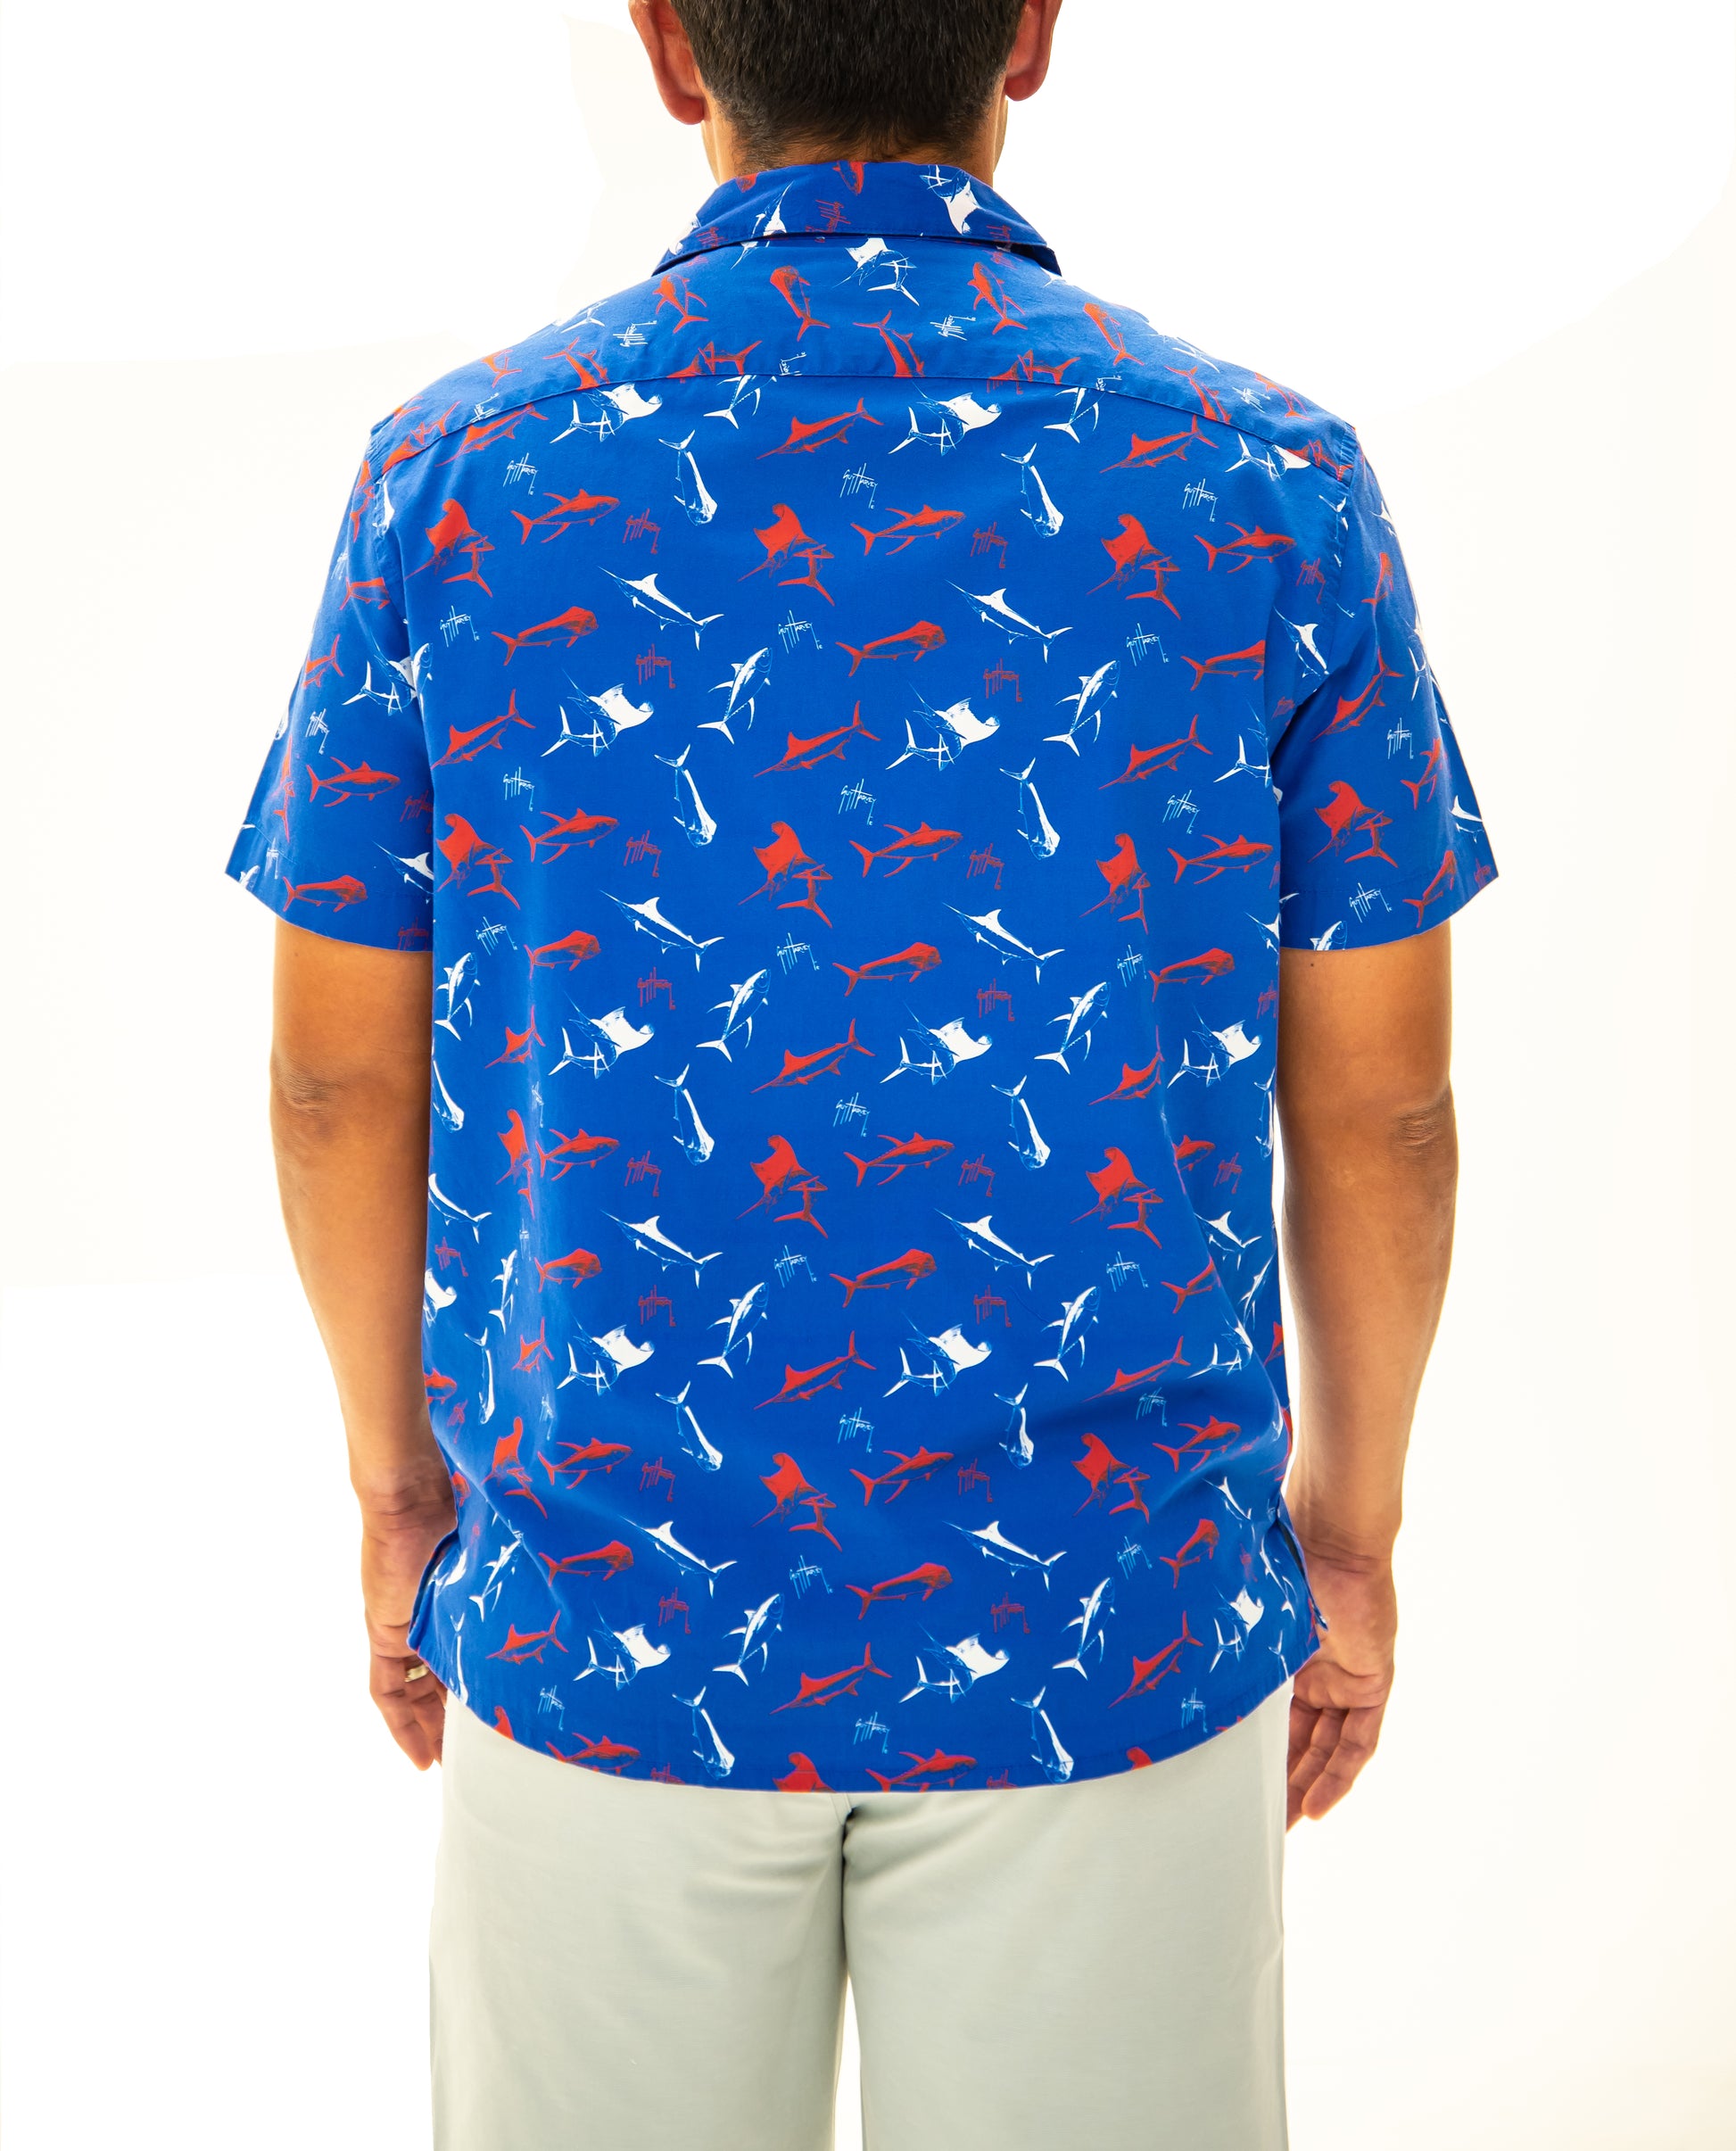 Guy Harvey Men's Short Sleeve Heathered Fishing Shirt